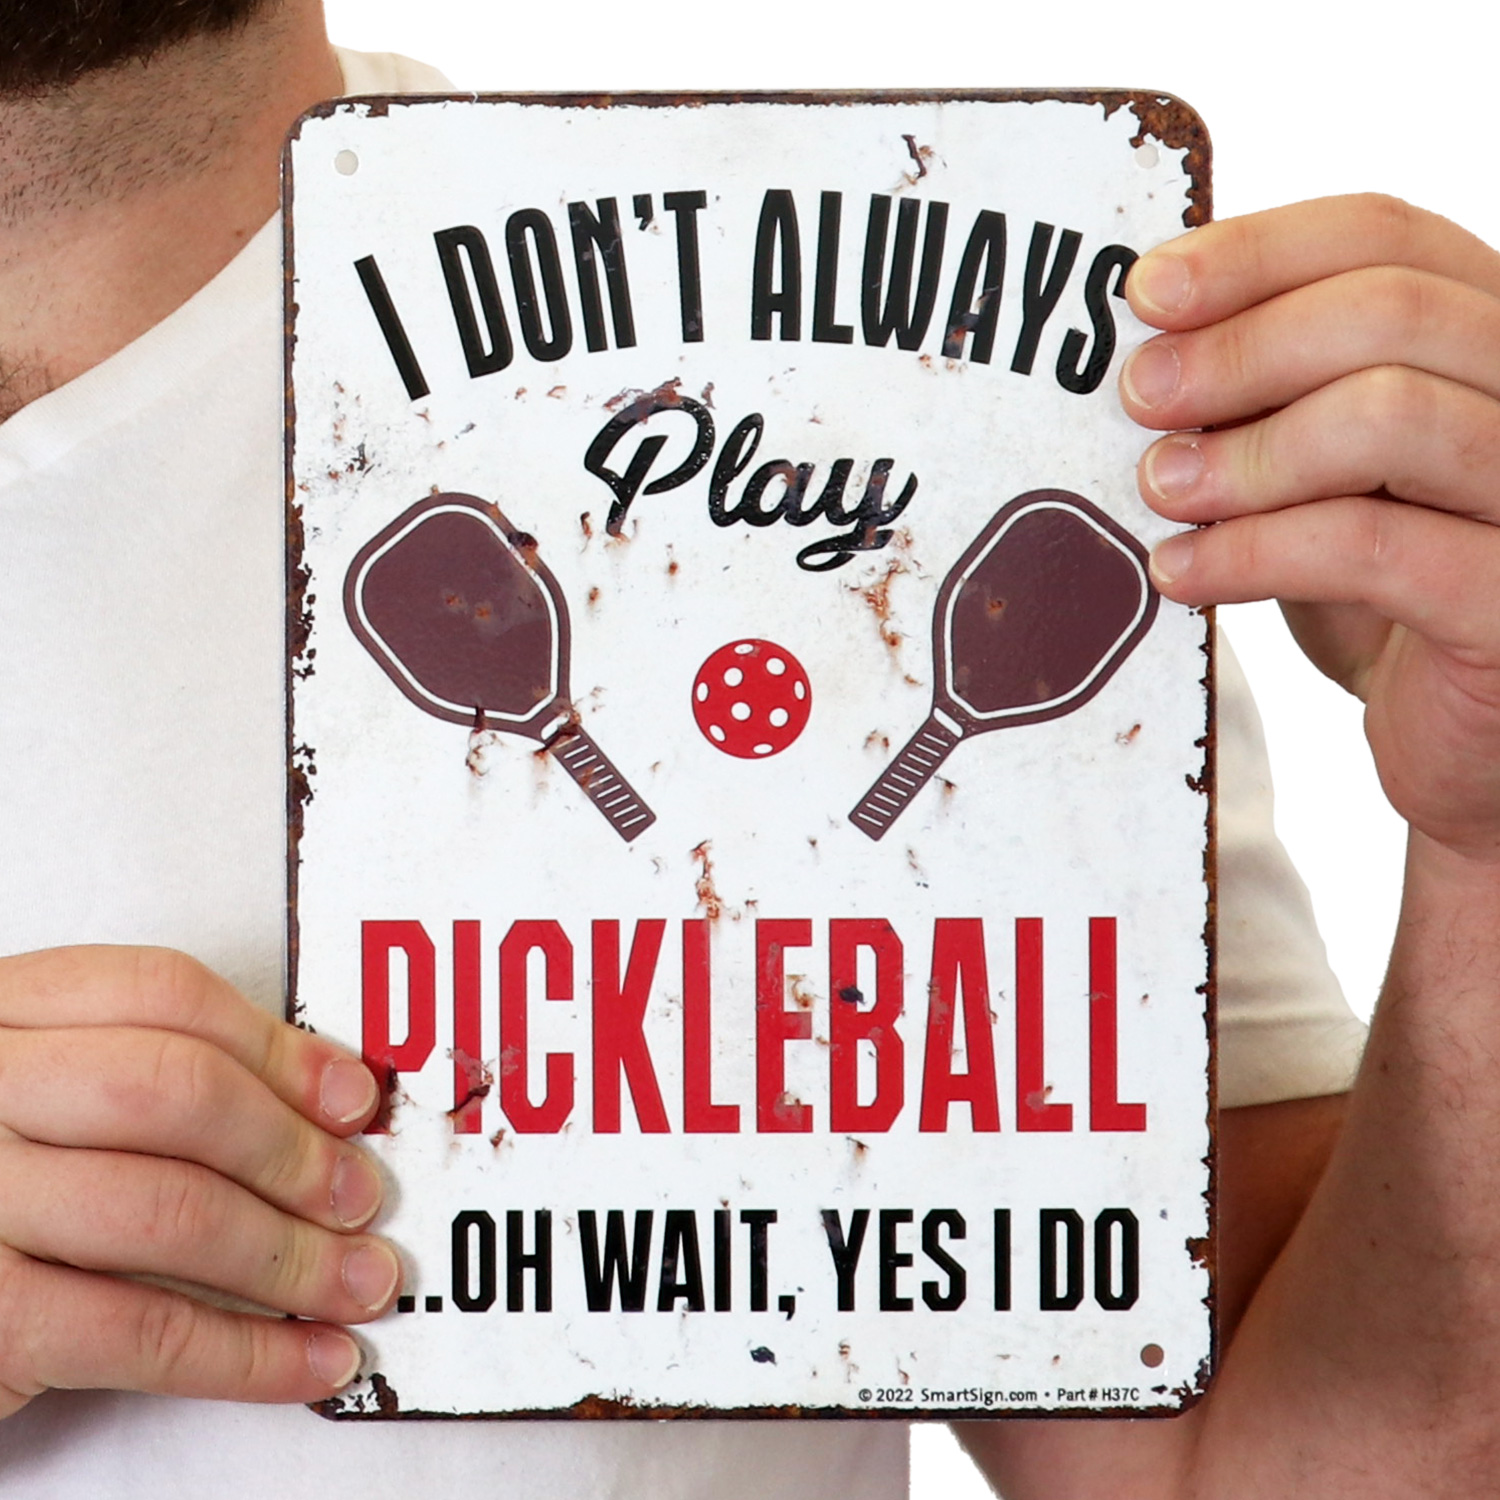 I Don't Always Play Pickleball Novelty Sign, SKU: S2-5003